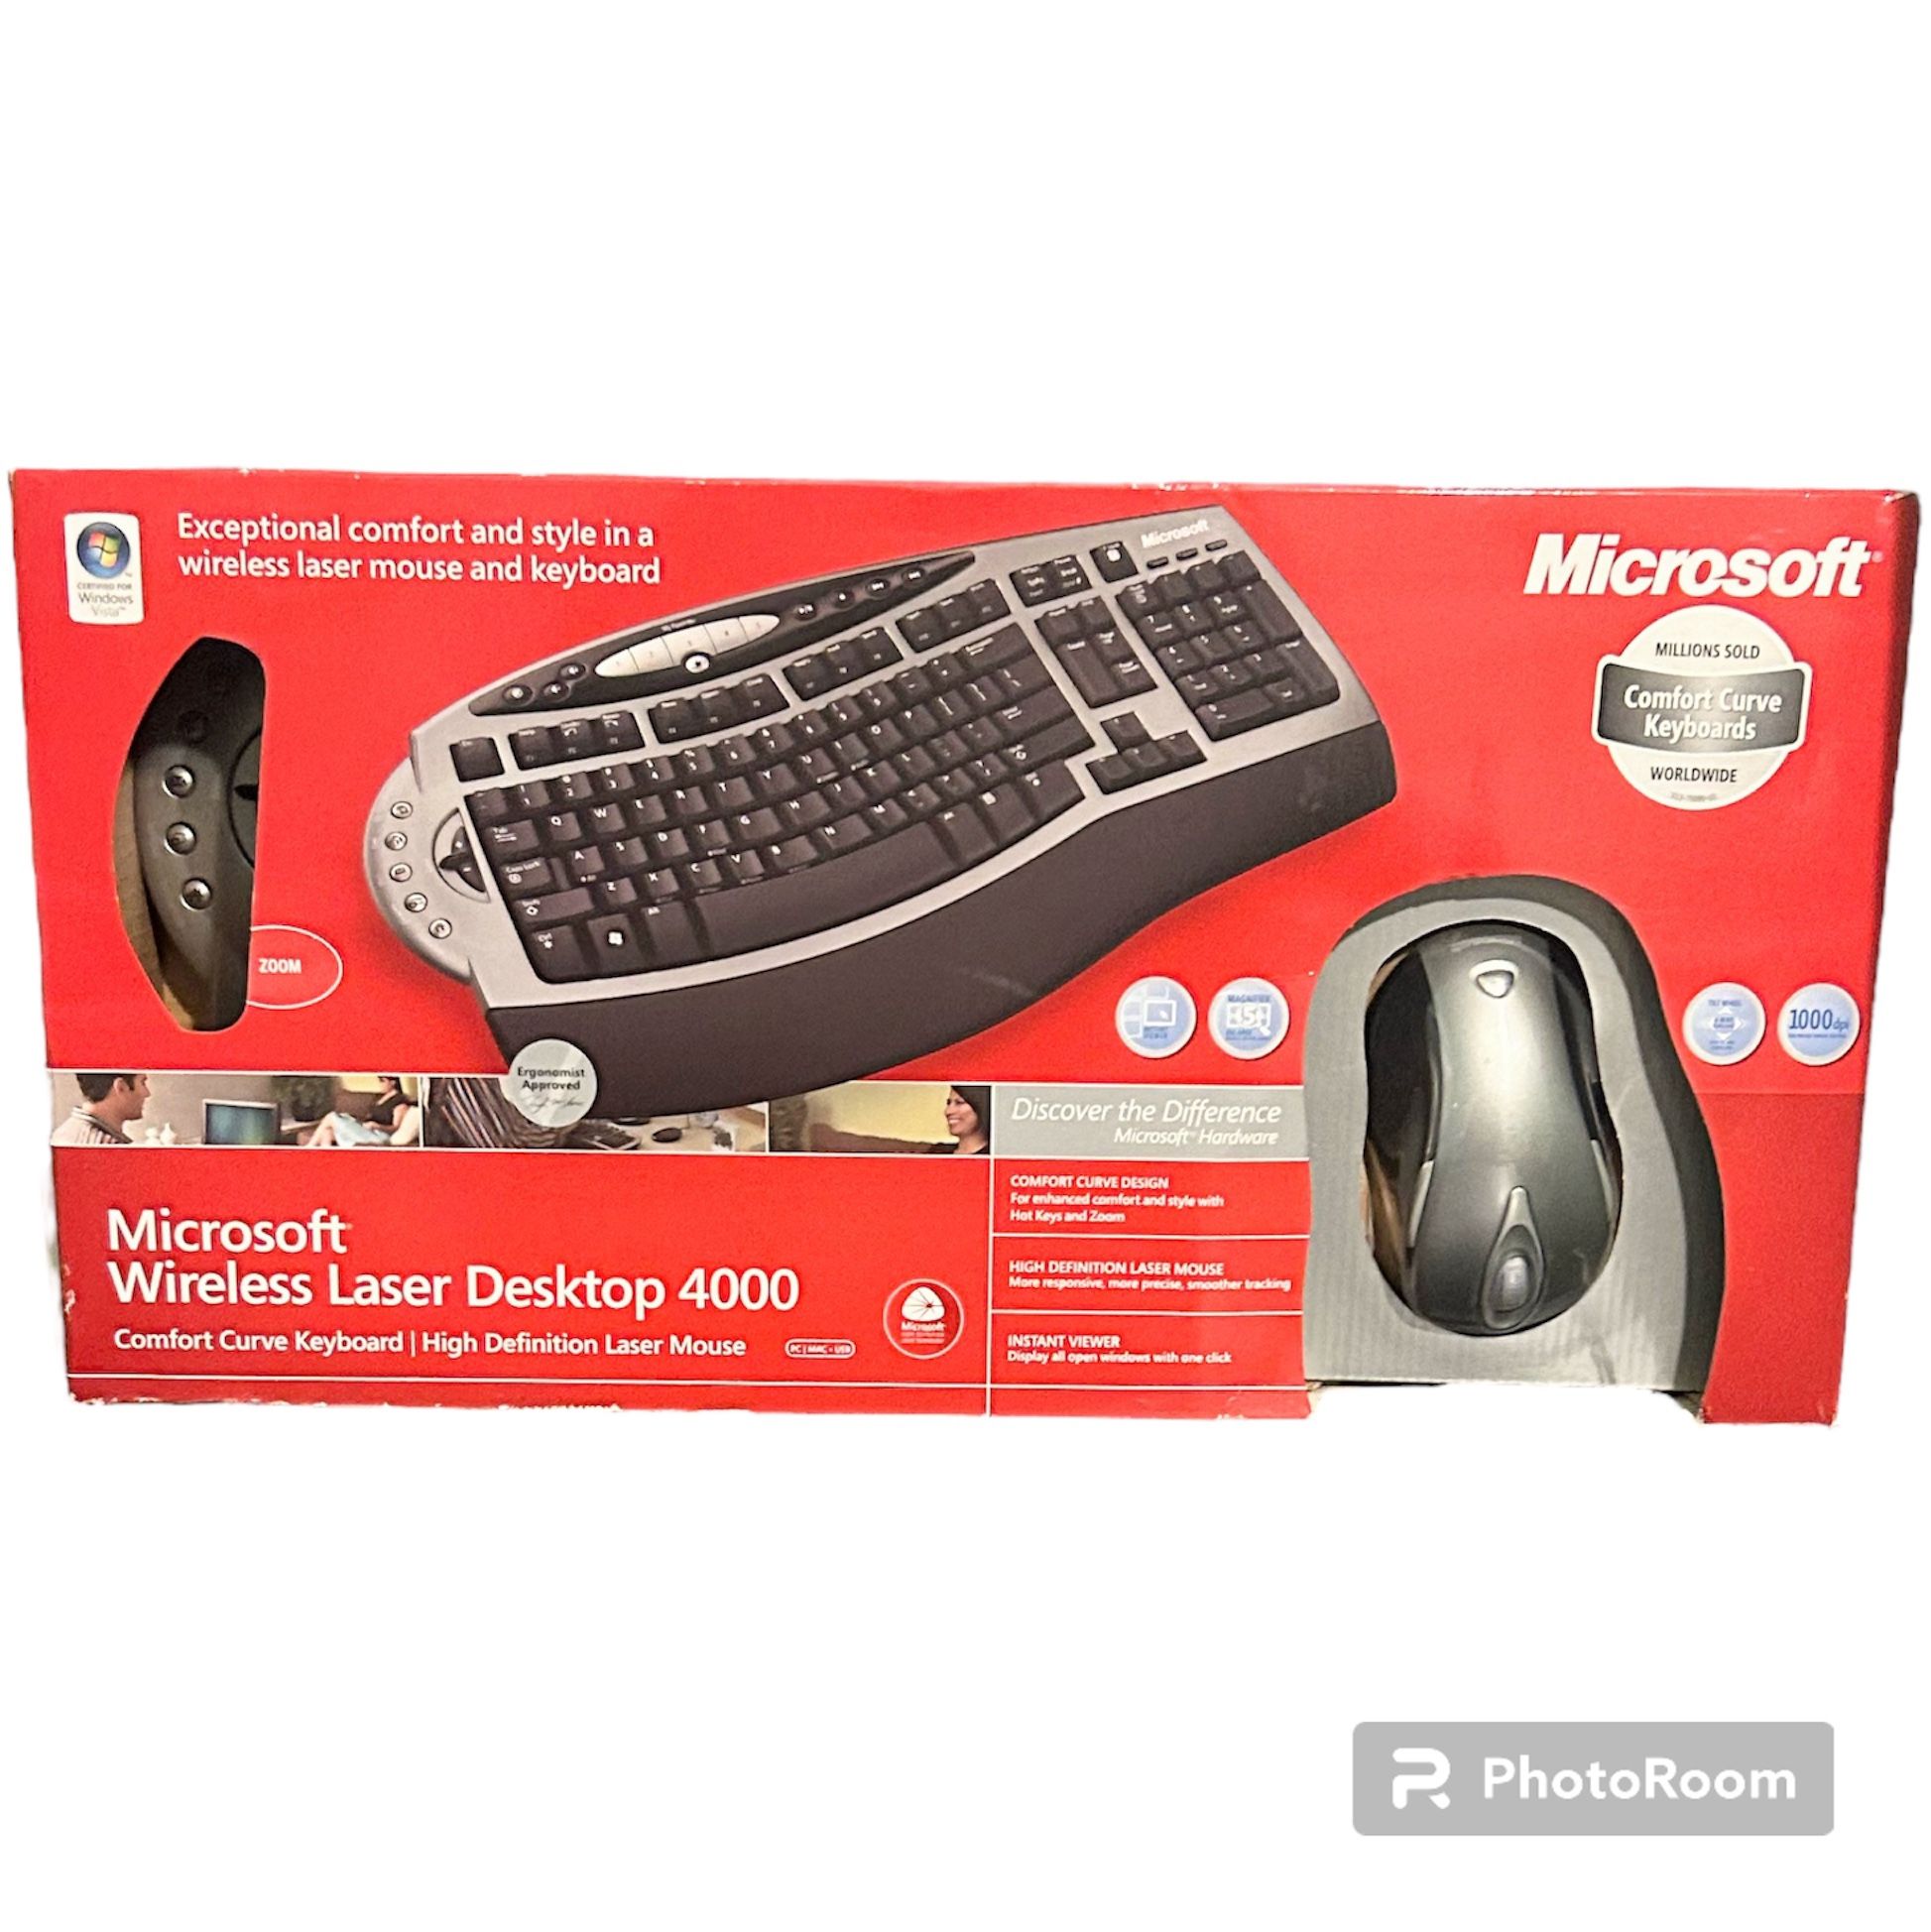 Microsoft Wireless Laser Desktop 4000 Comfort Curve Keyboard and Mouse